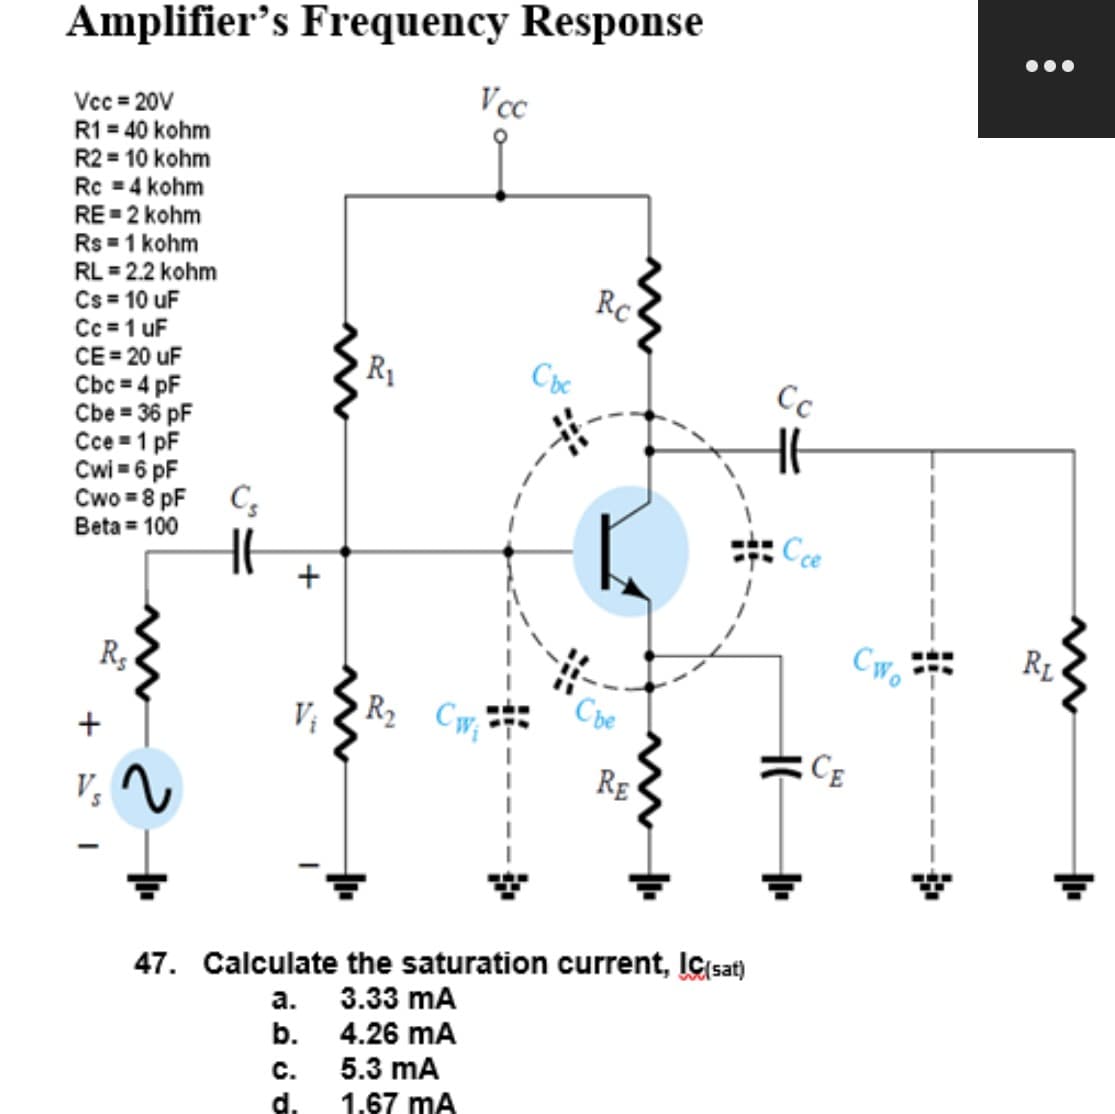 Amplifier's Frequency Response
Vcc=20V
R1 = 40 kohm
R2 = 10 kohm
Rc = 4 kohm
RE=2 kohm
Rs = 1 kohm
RL = 2.2 kohm
Cs = 10 uF
Cc = 1 uF
CE=20 uF
Cbc = 4 pF
Cbe = 36 pF
Cce 1 pF
Cwi=6 pF
Cwo = 8 pF
Beta = 100
+=1
Rs
V₂
2
Cs
+
V₁
a.
b.
R₁
C.
d.
Vcc
R₂ Cw₁
Cbc
Rc
Che
47. Calculate the saturation current, IC(sat)
3.33 MA
4.26 MA
5.3 mA
1.67 mA
RE
Cc
Cce
CE
Cwo
:
RL